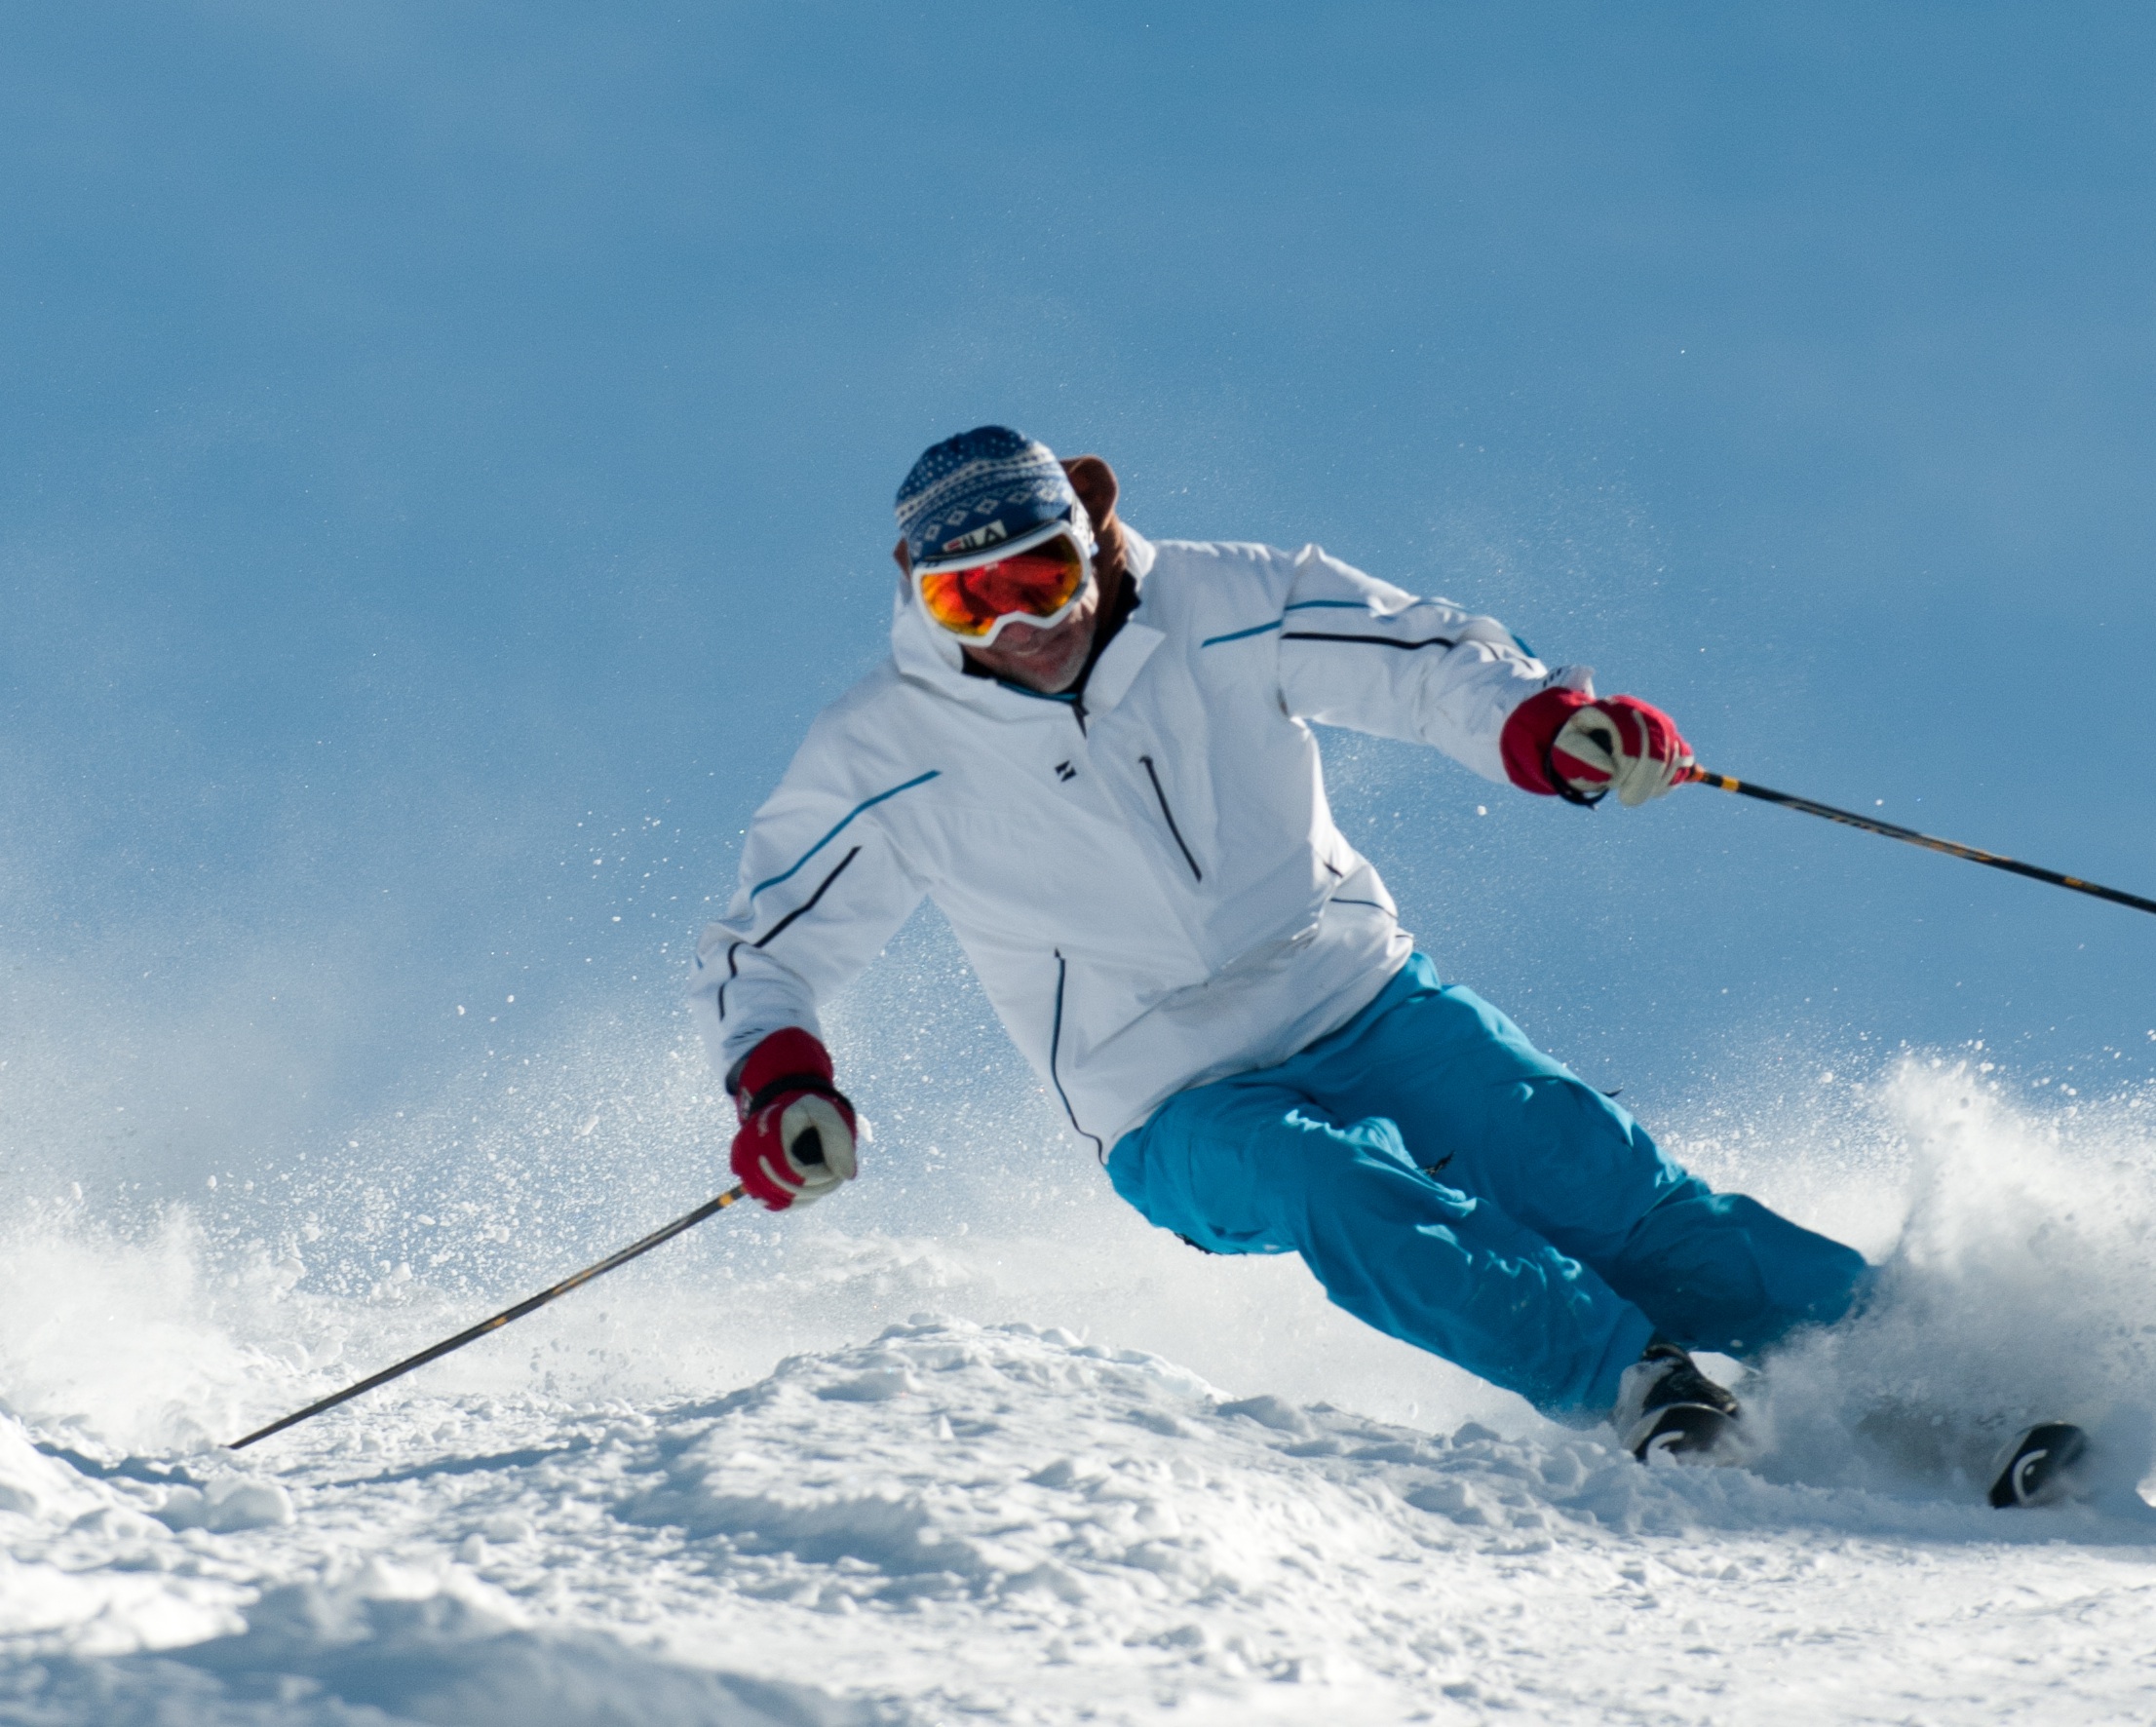 Skiing pictures. Горнолыжный спорт. Лыжи спорт. Горные лыжи спорт. Катание на горных лыжах.